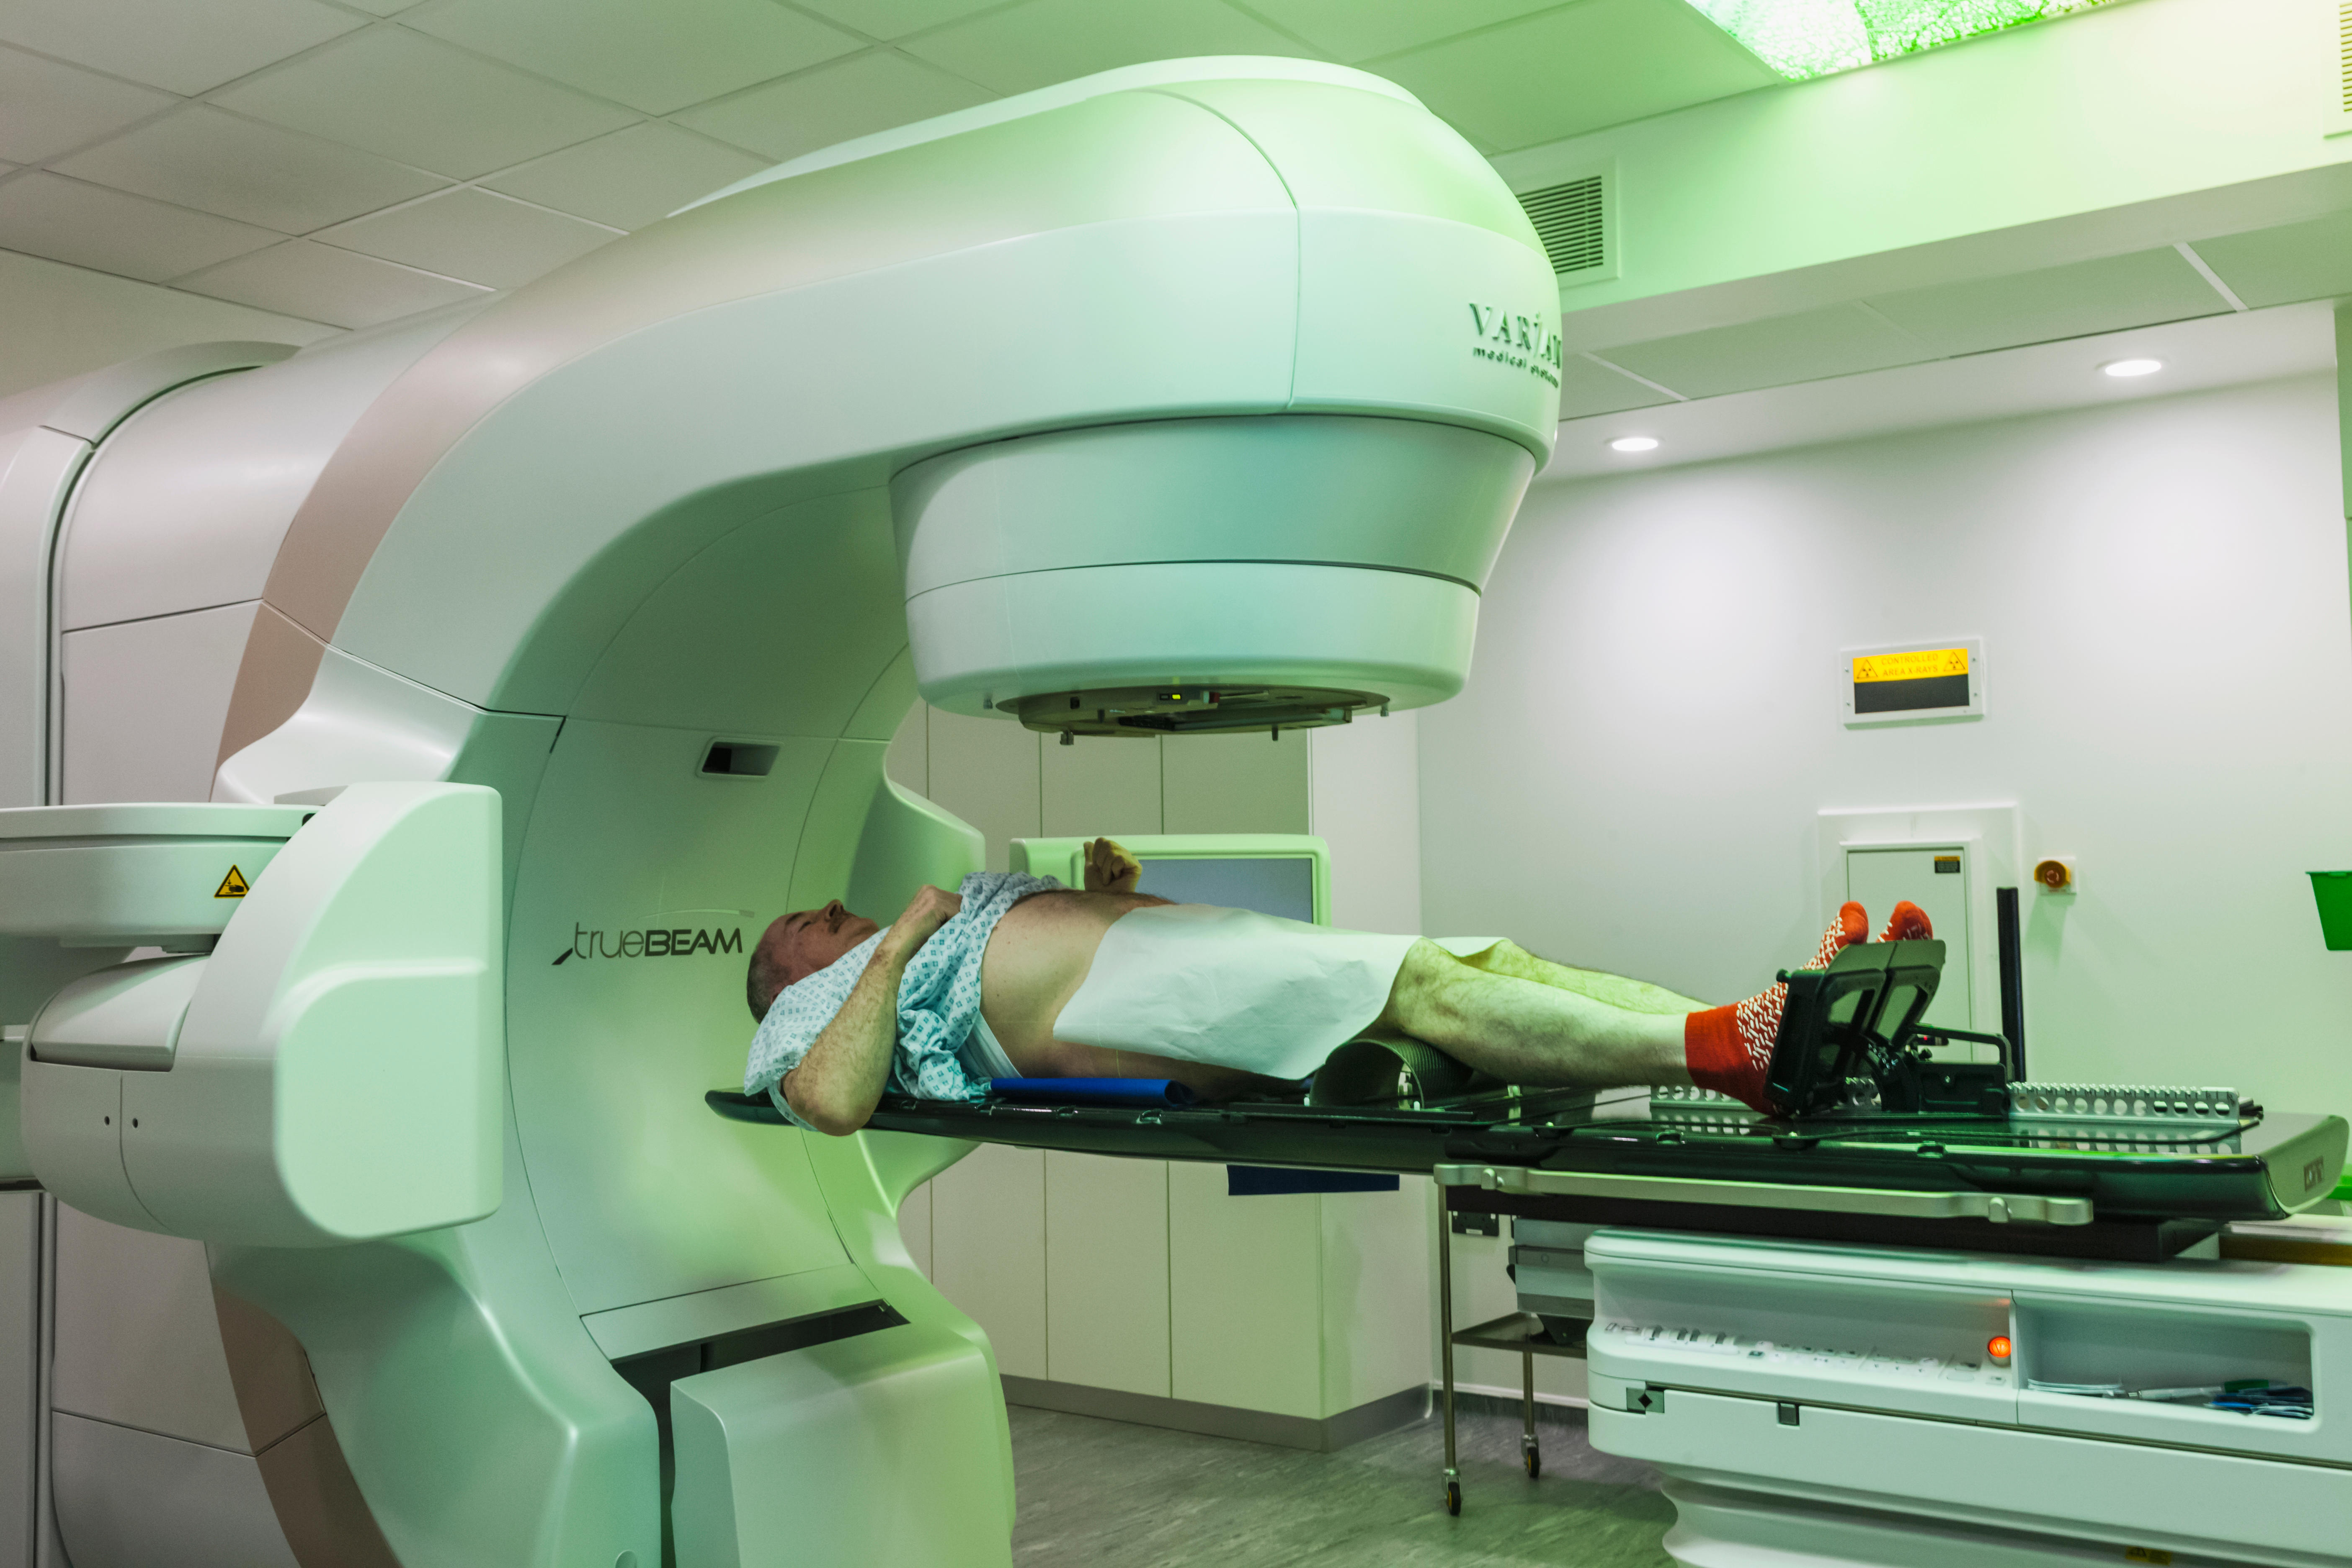 Patient undergoes radiotherapy